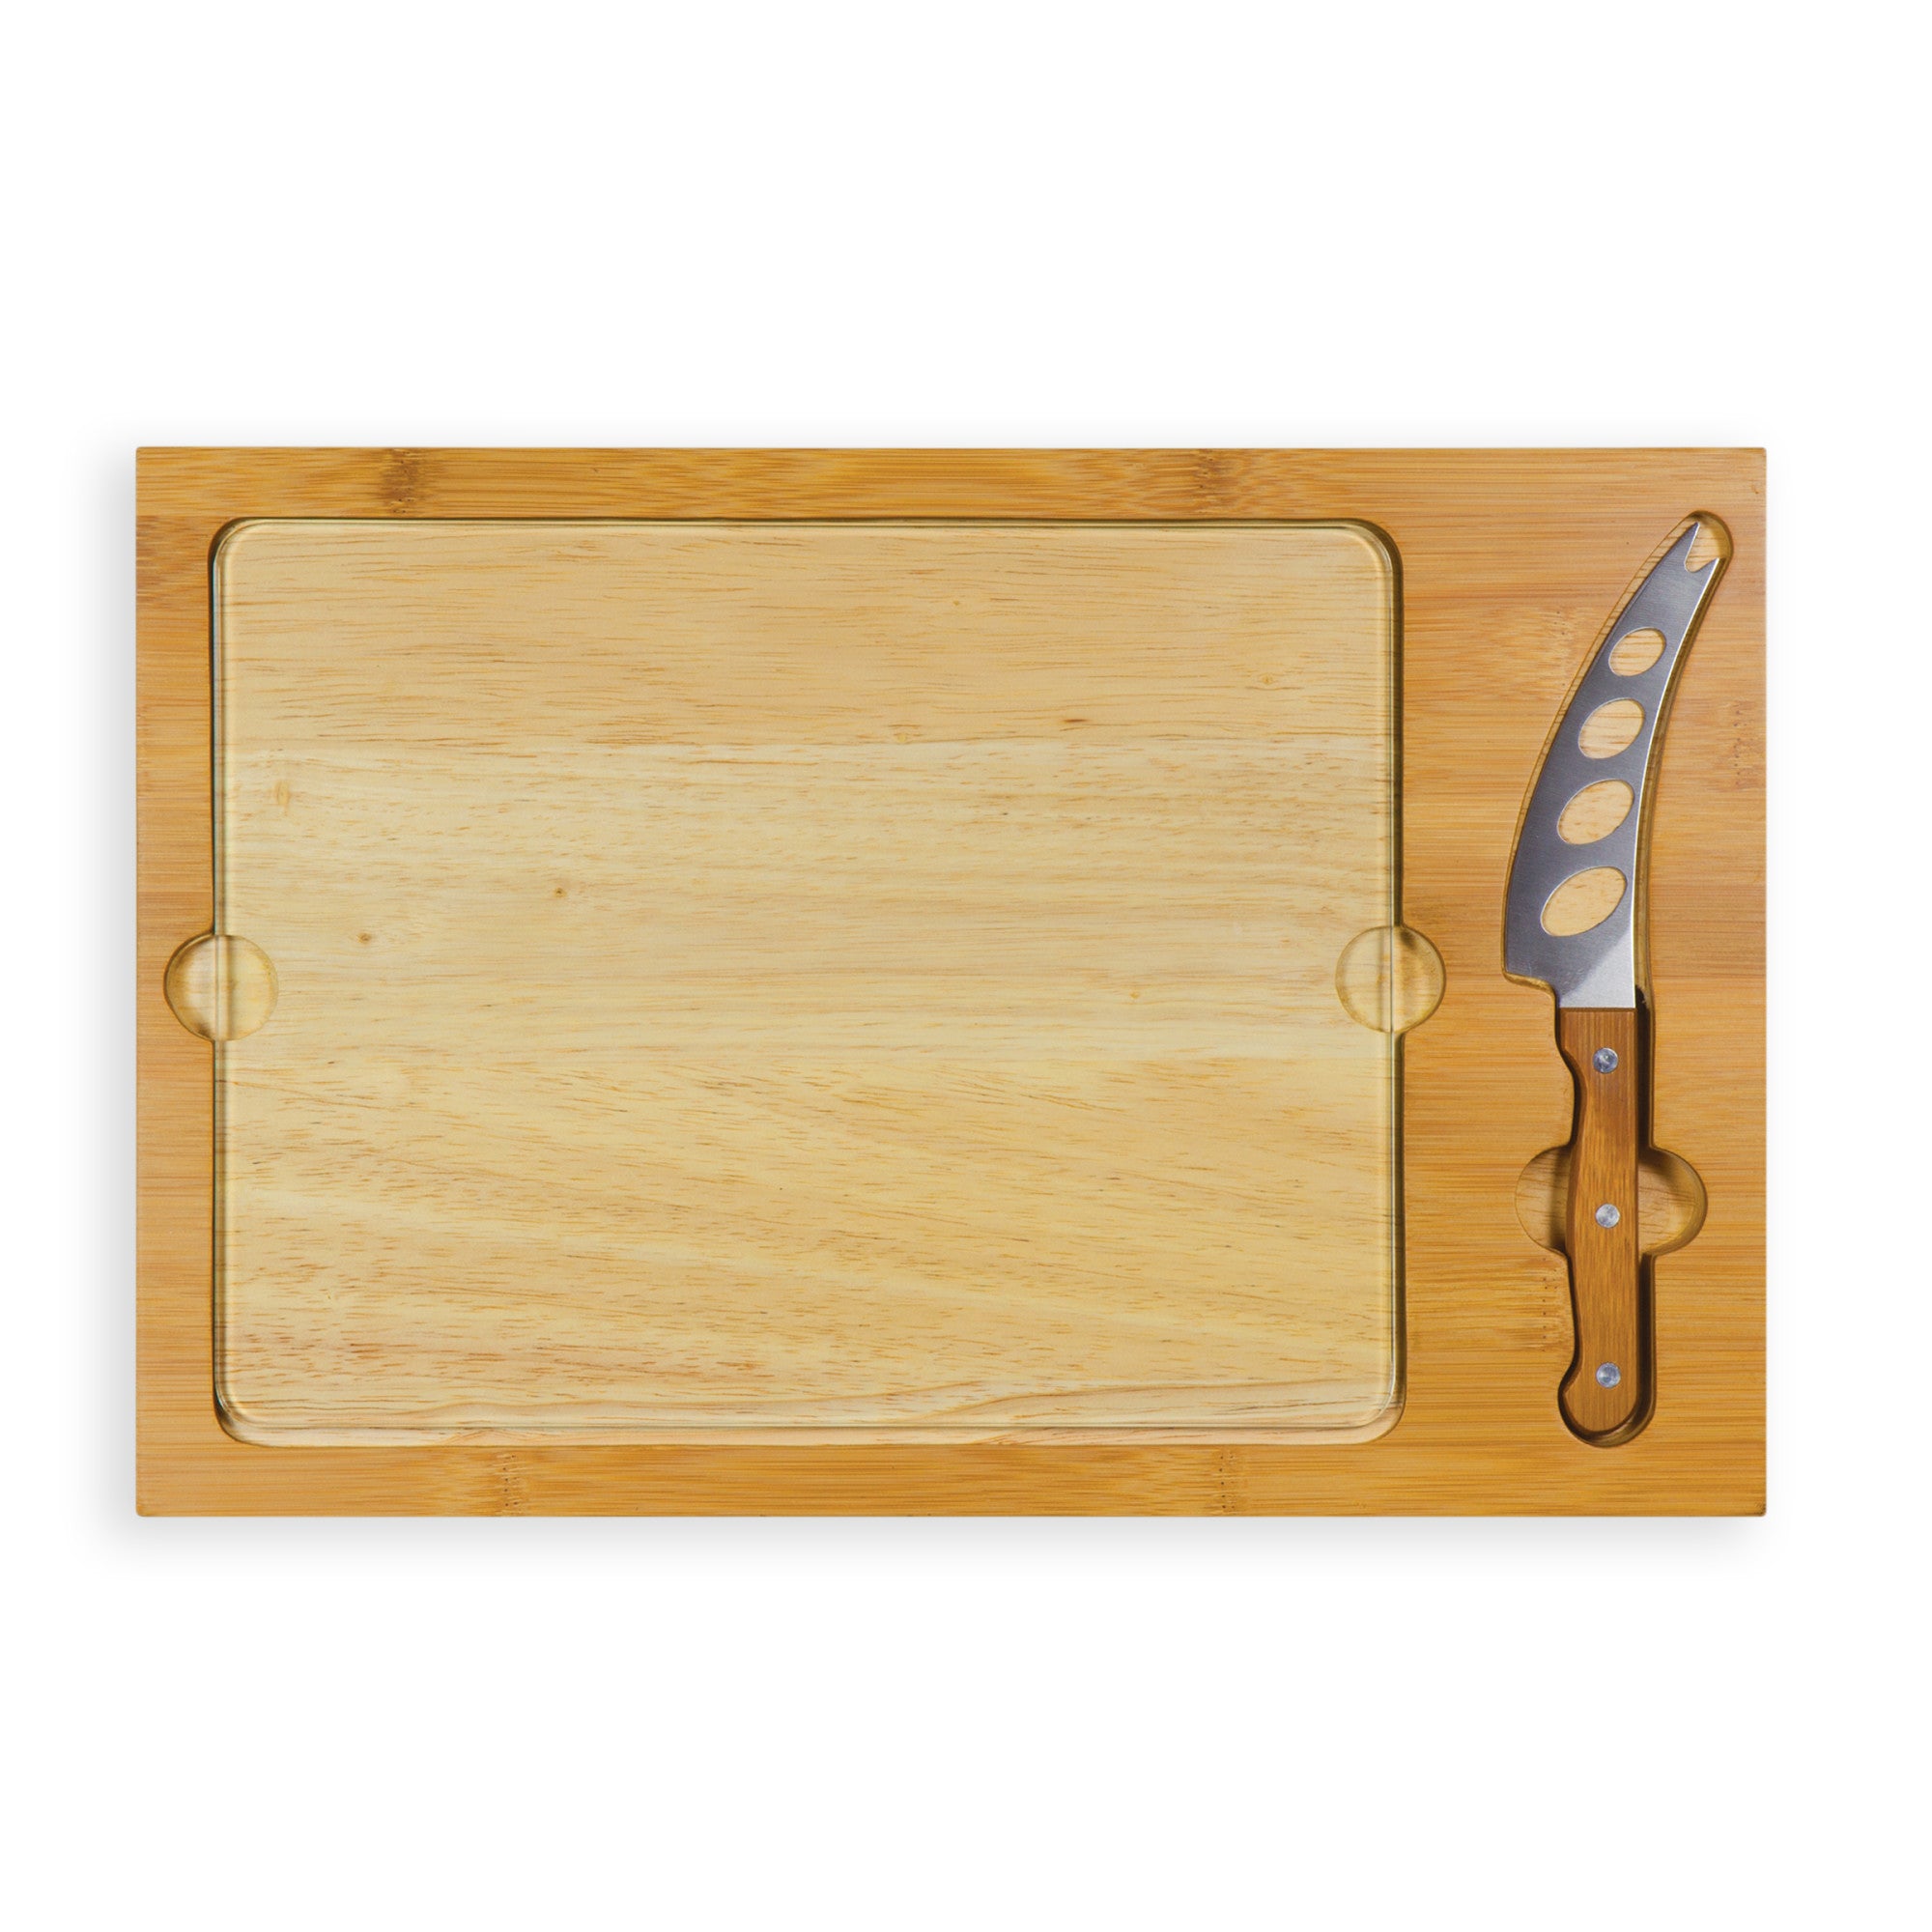 Football Field - Virginia Tech Hokies - Icon Glass Top Cutting Board & Knife Set